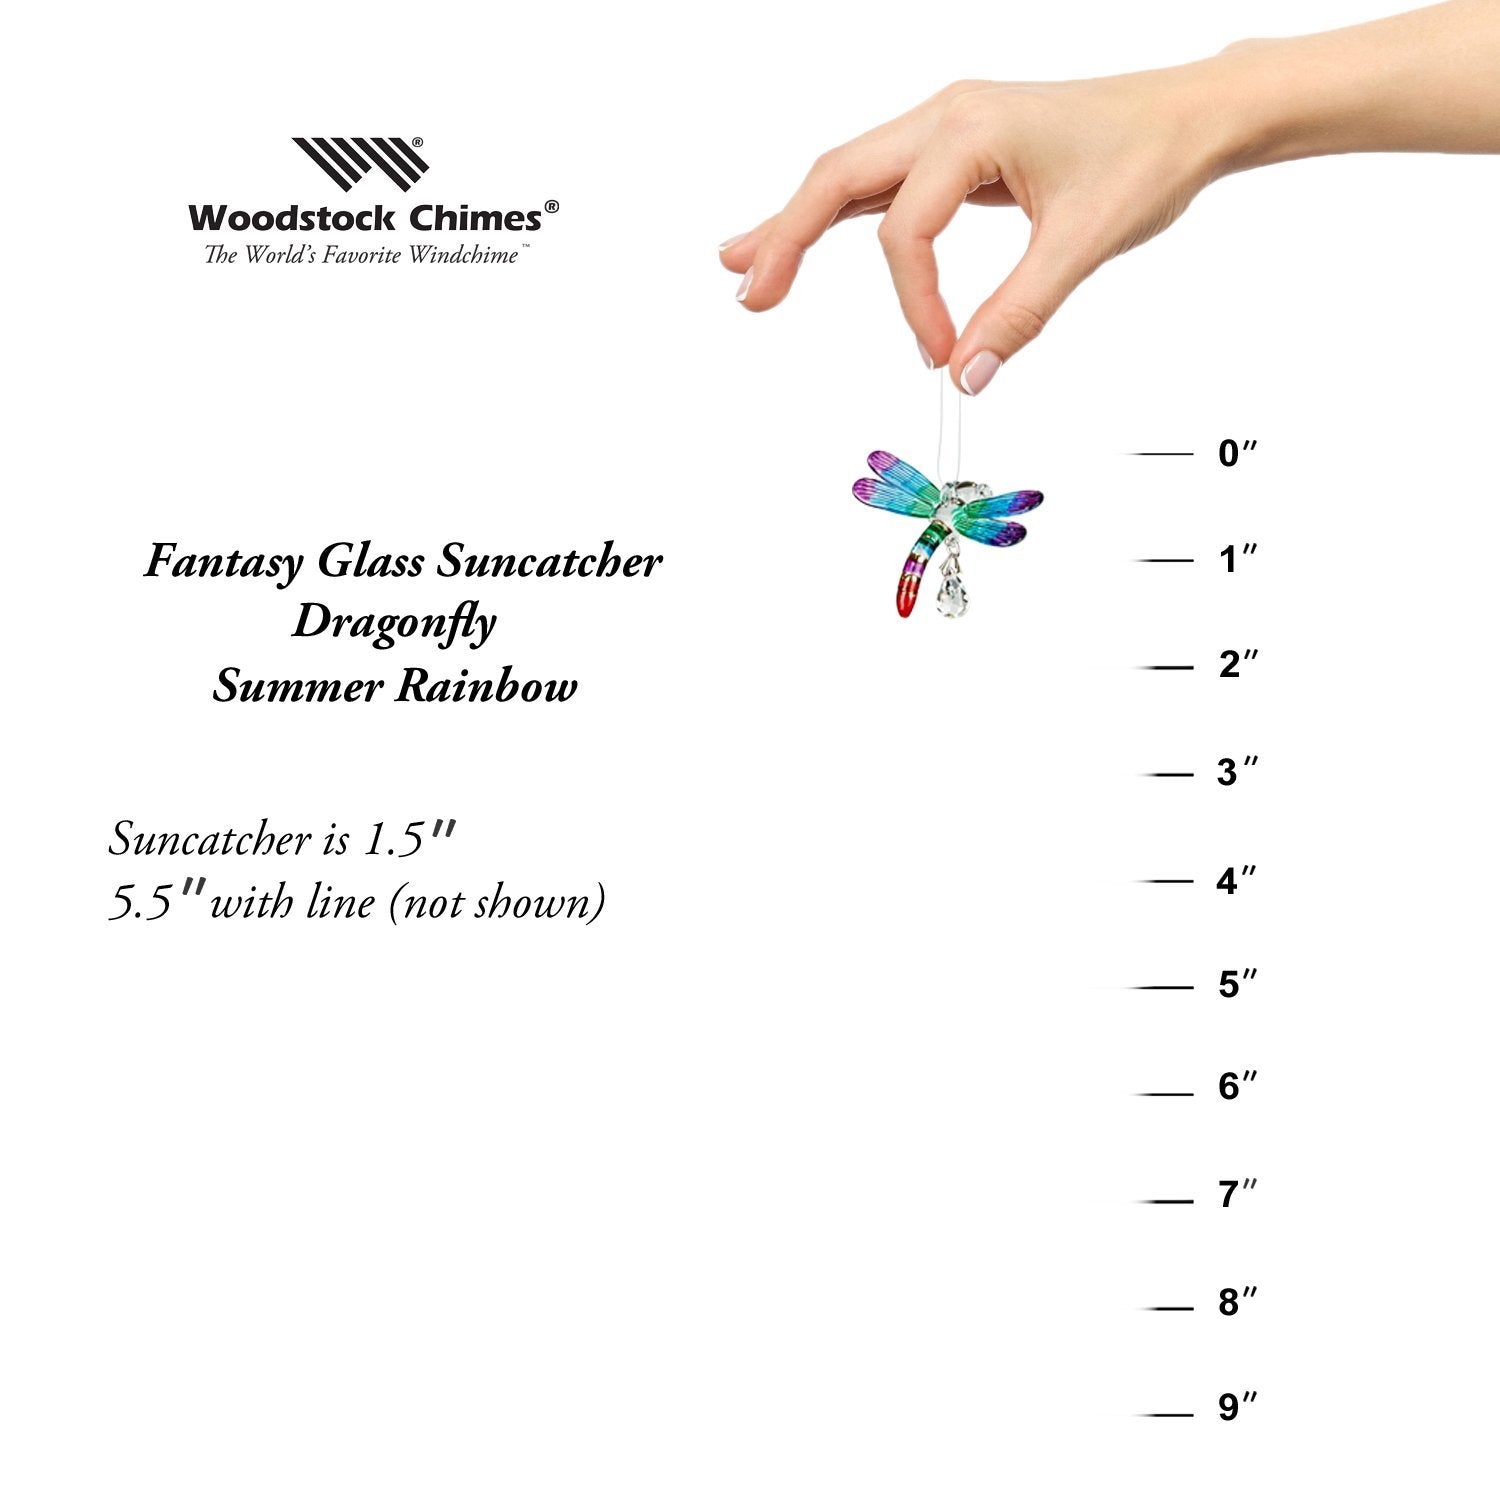 Fantasy Glass Suncatcher - Dragonfly, Summer Rainbow proportion image